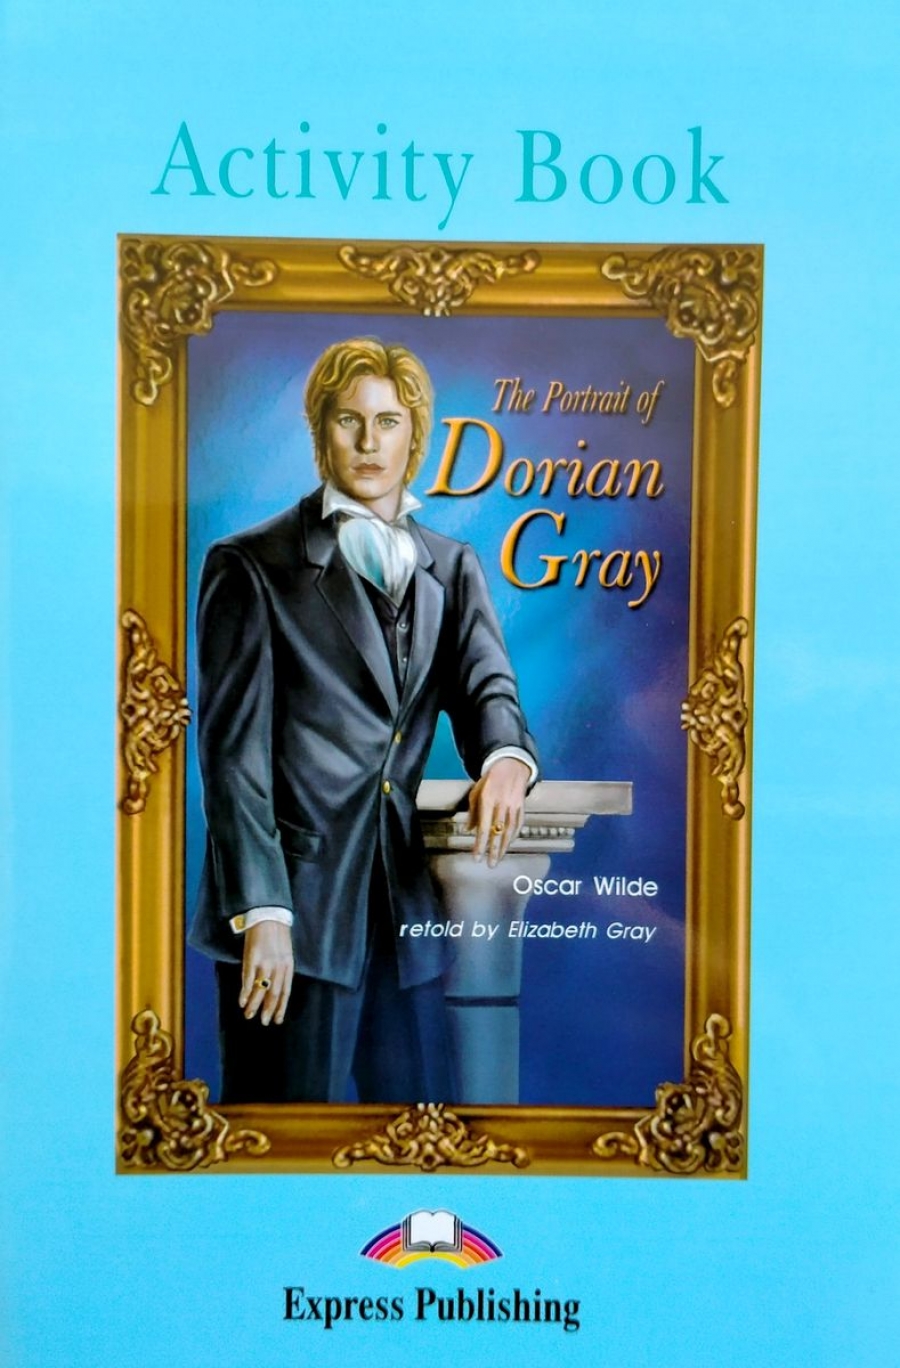 Oscar Wilde, retold by Elizabeth Gray The Portrait of Dorian Gray. Graded Readers. Level 4. Activity Book.   